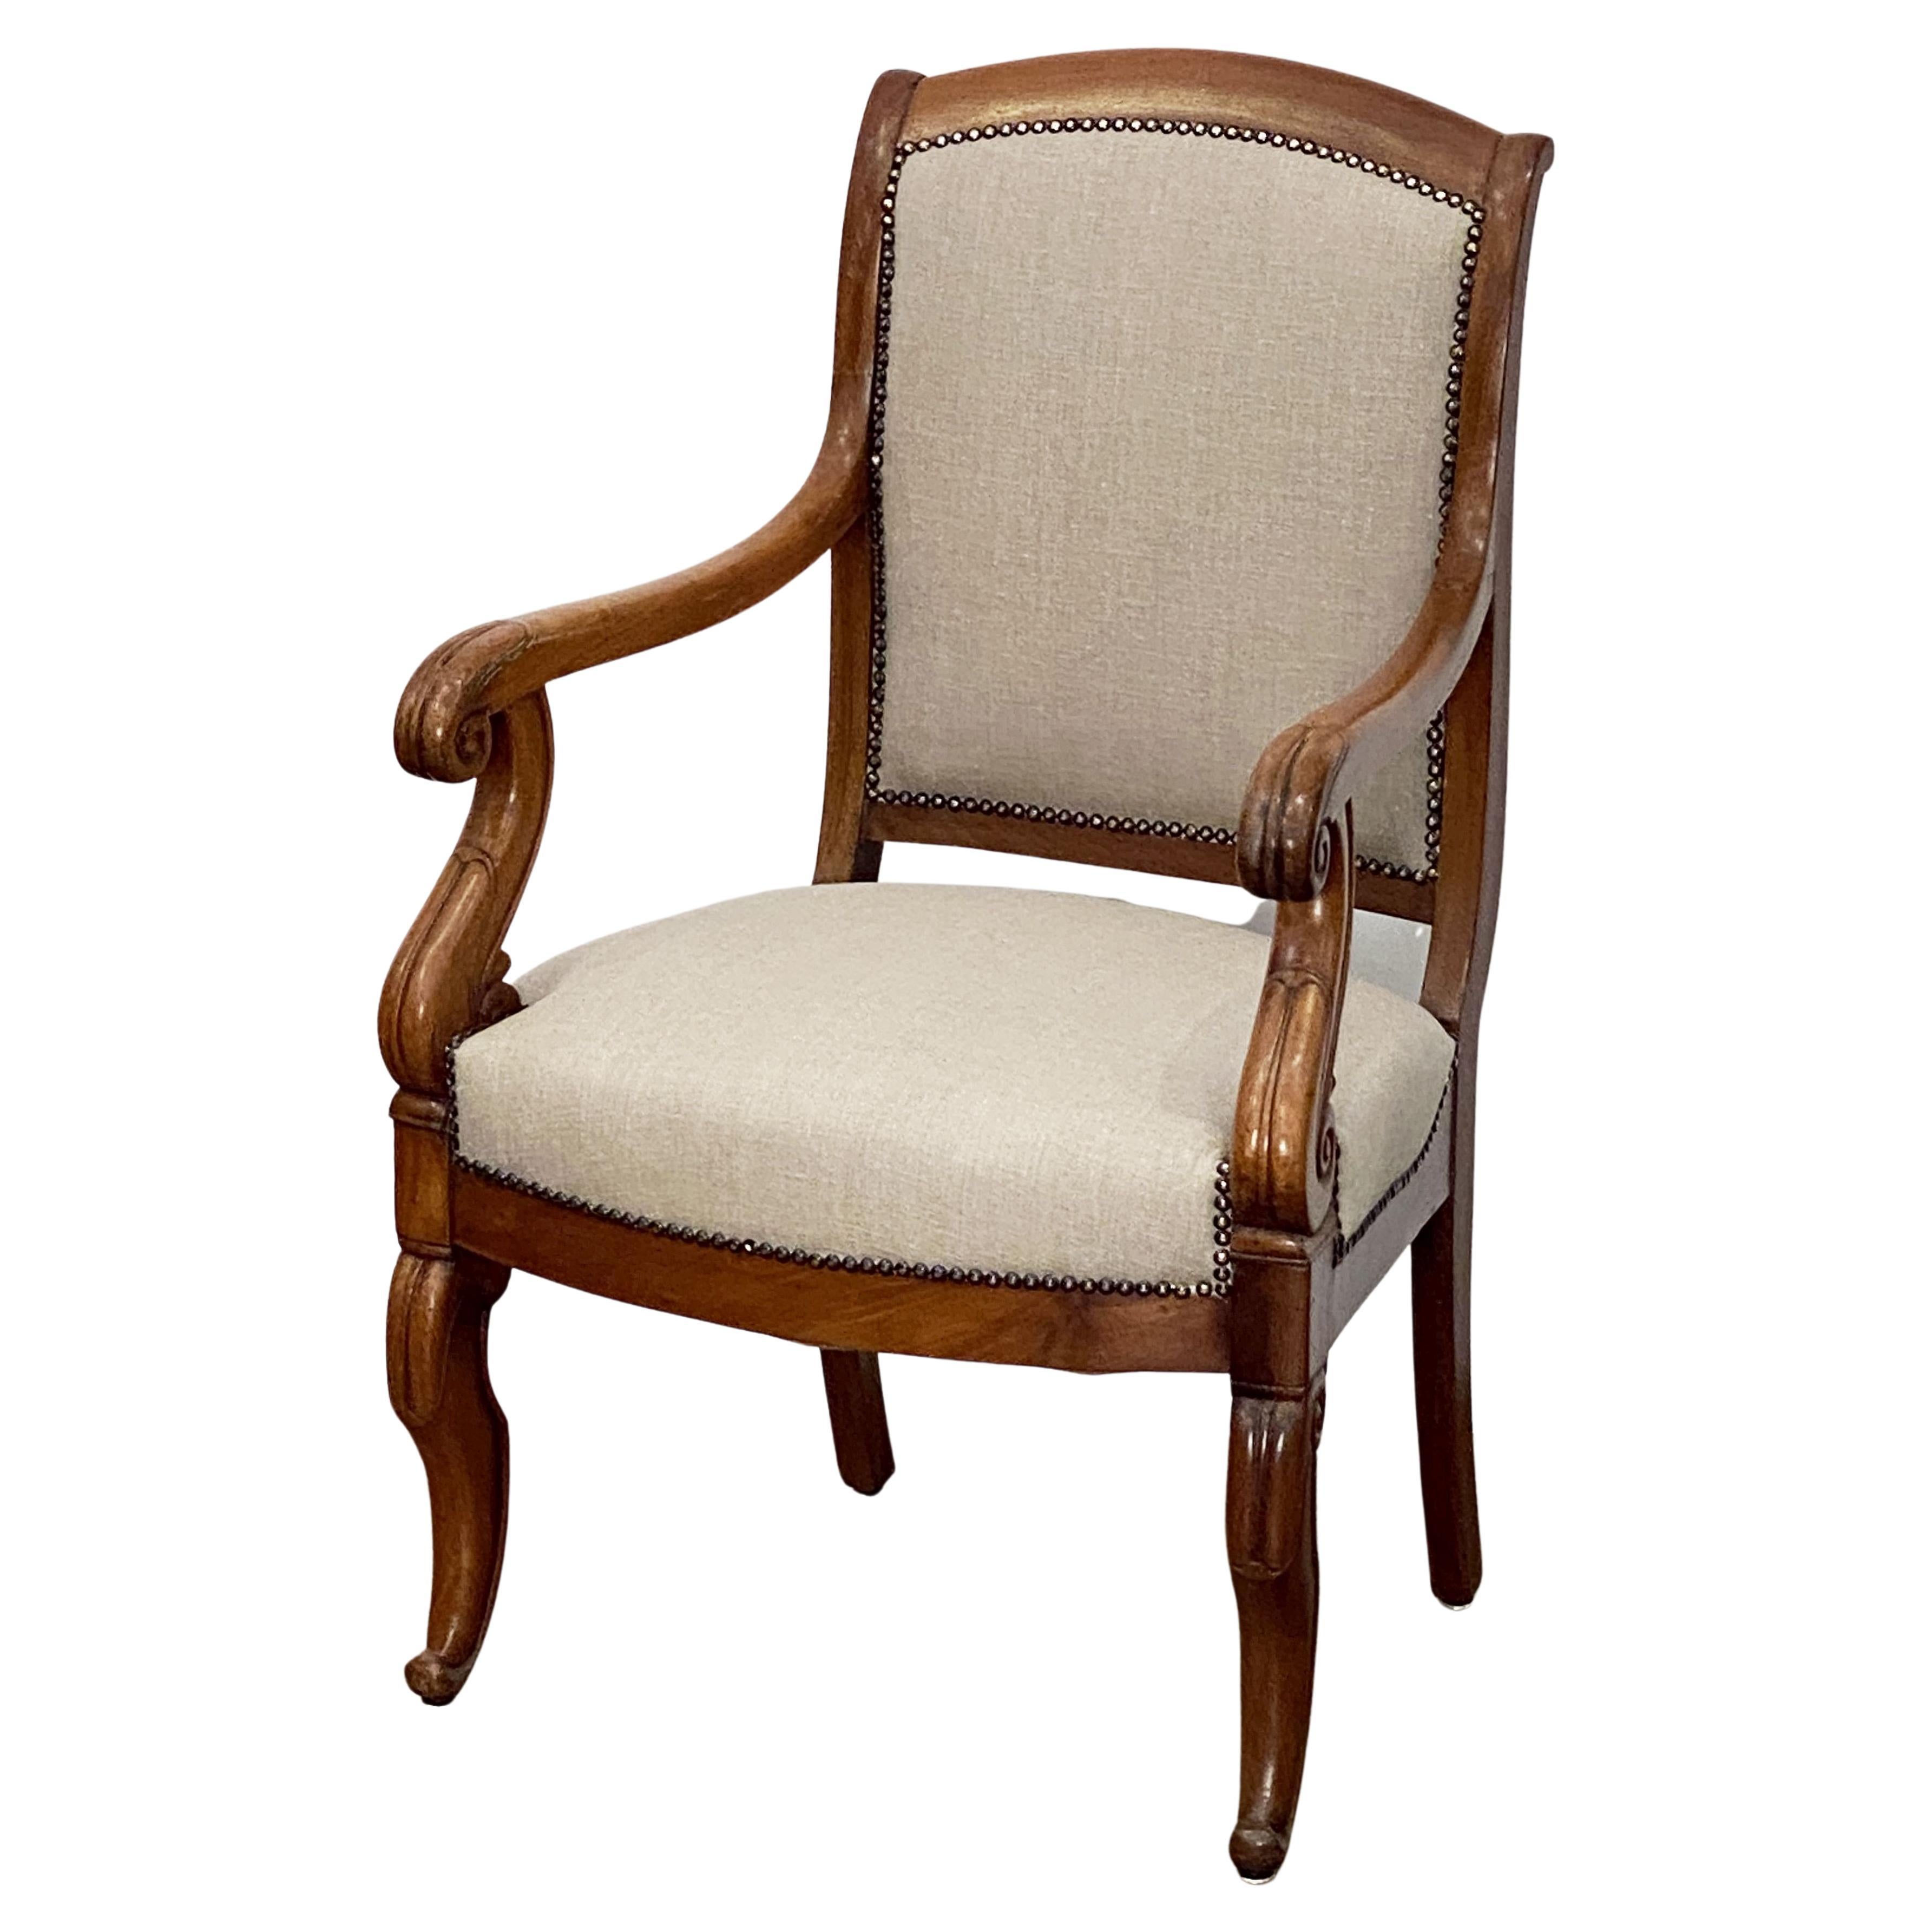 Gepolsterter Fauteuil-Sessel oder Salonsessel aus Nussbaumholz, französisch